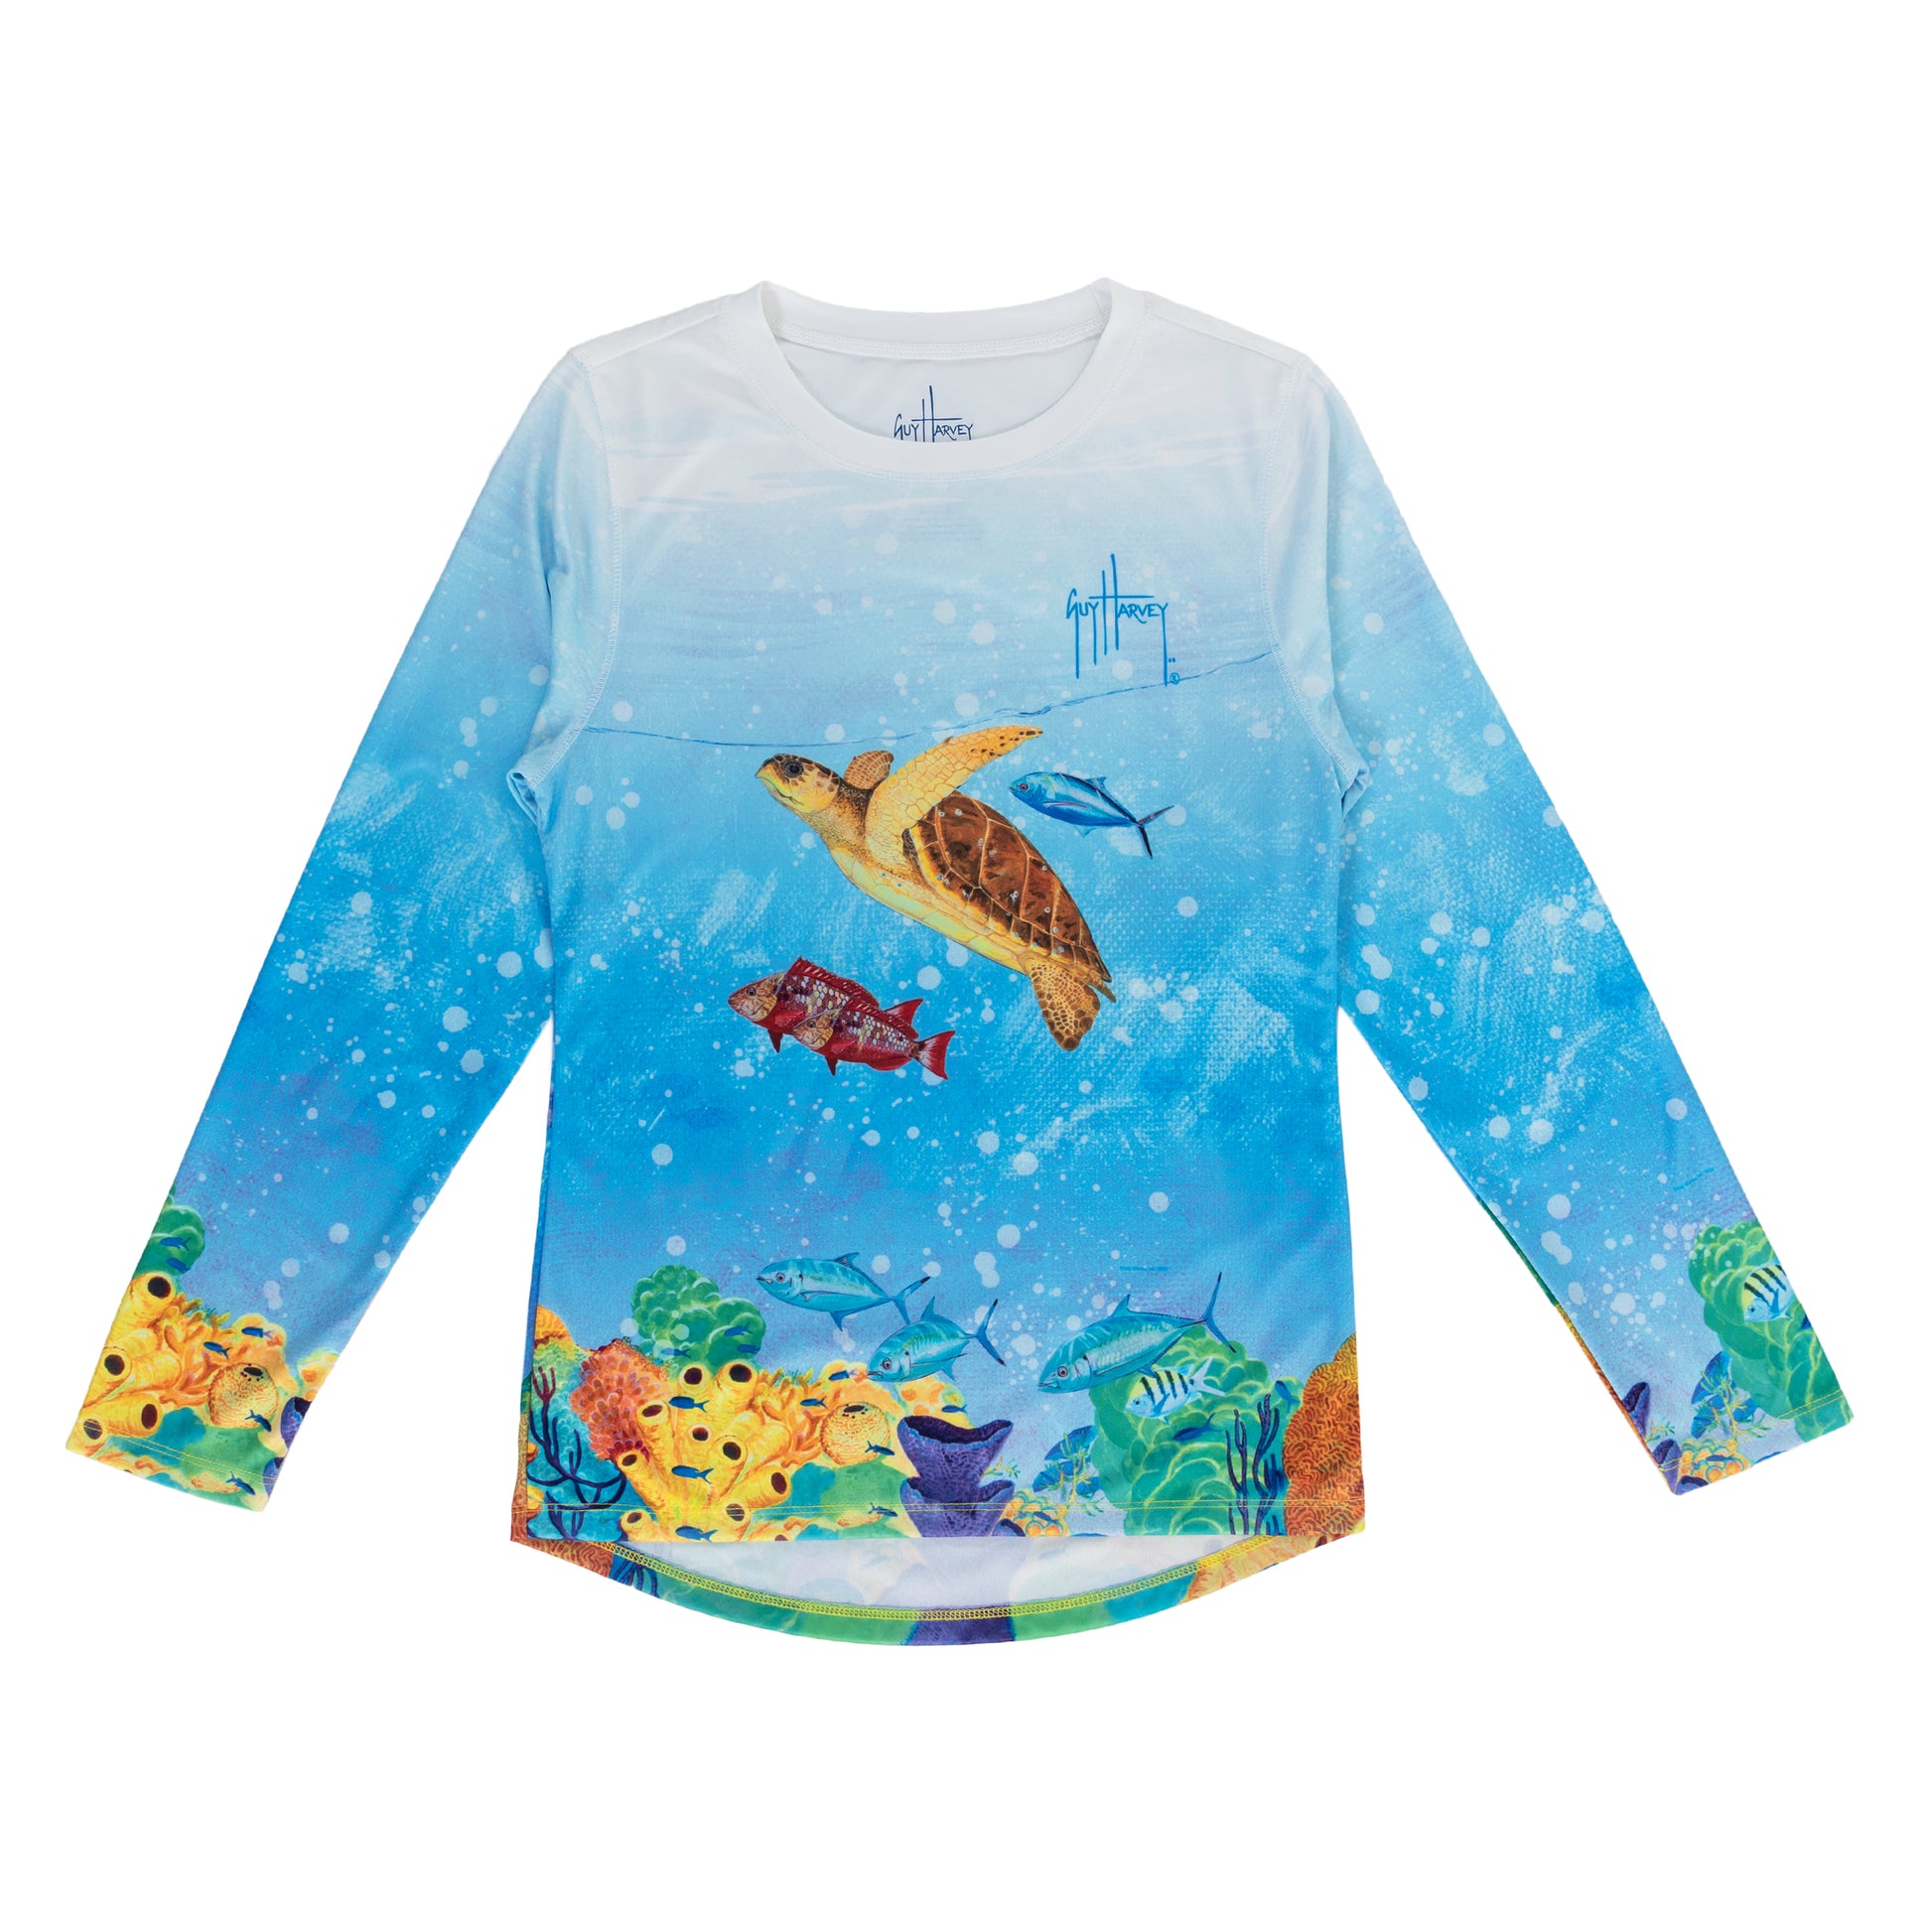 Protect The Ocean T-shirt Medium Save The Planet Sea Turtle Beach Sun